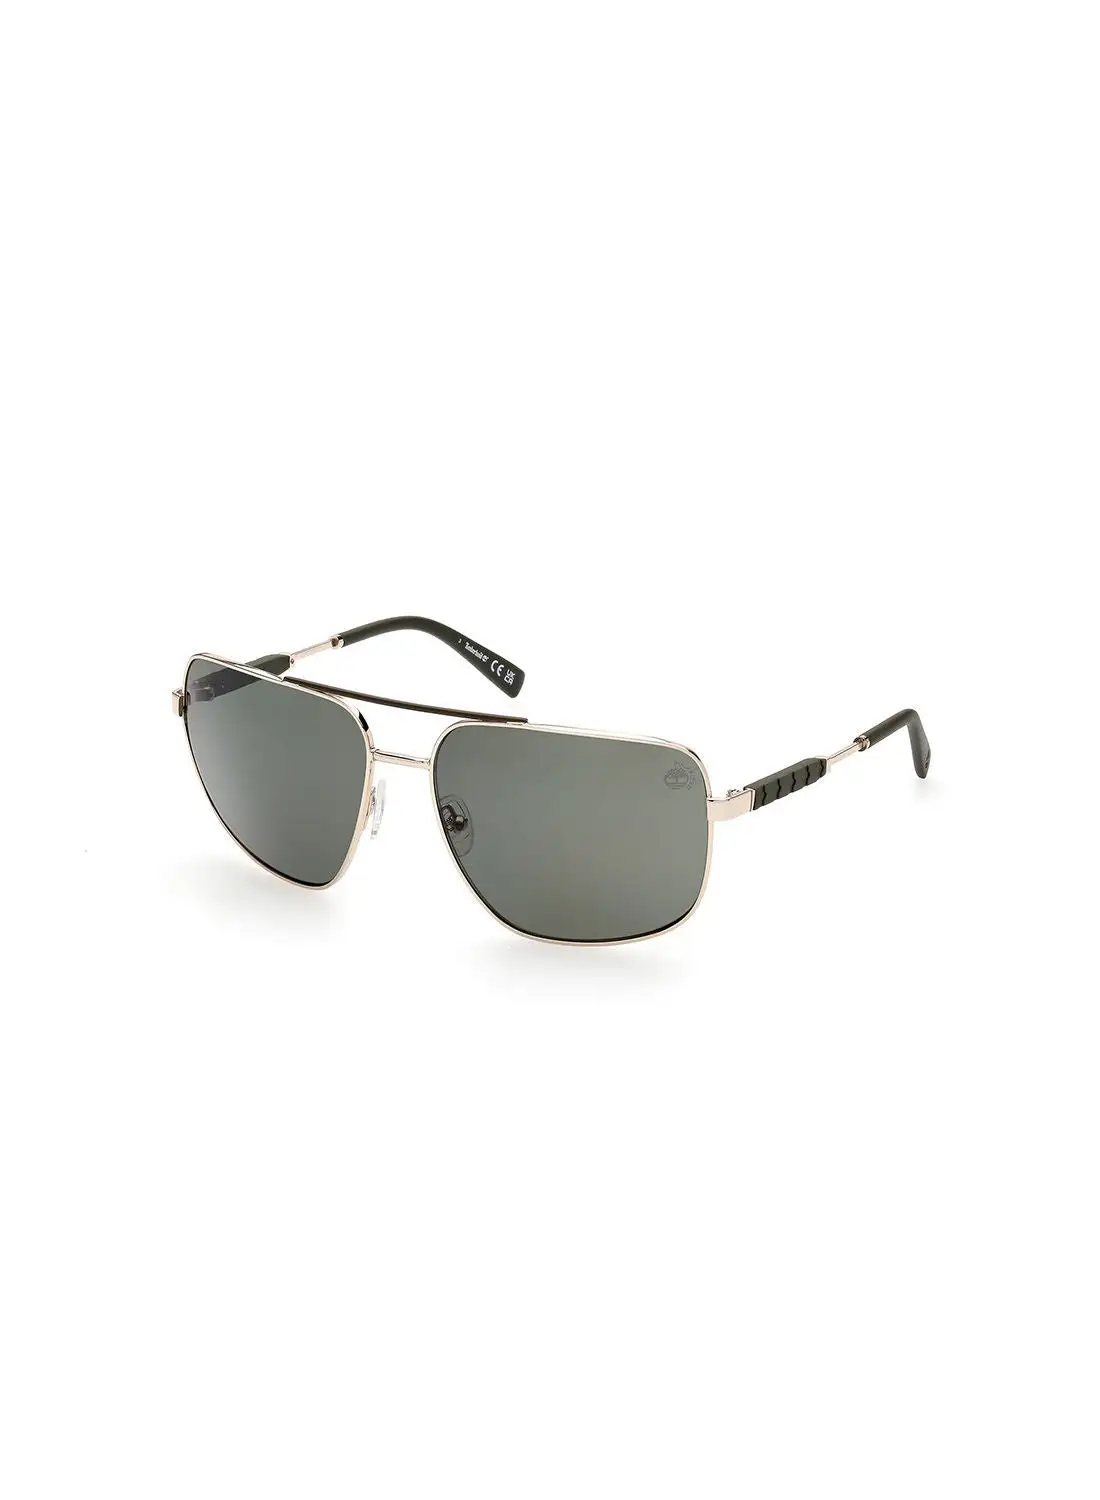 Timberland Men's Polarized Navigator Sunglasses - TB928332R62 - Lens Size: 62 Mm